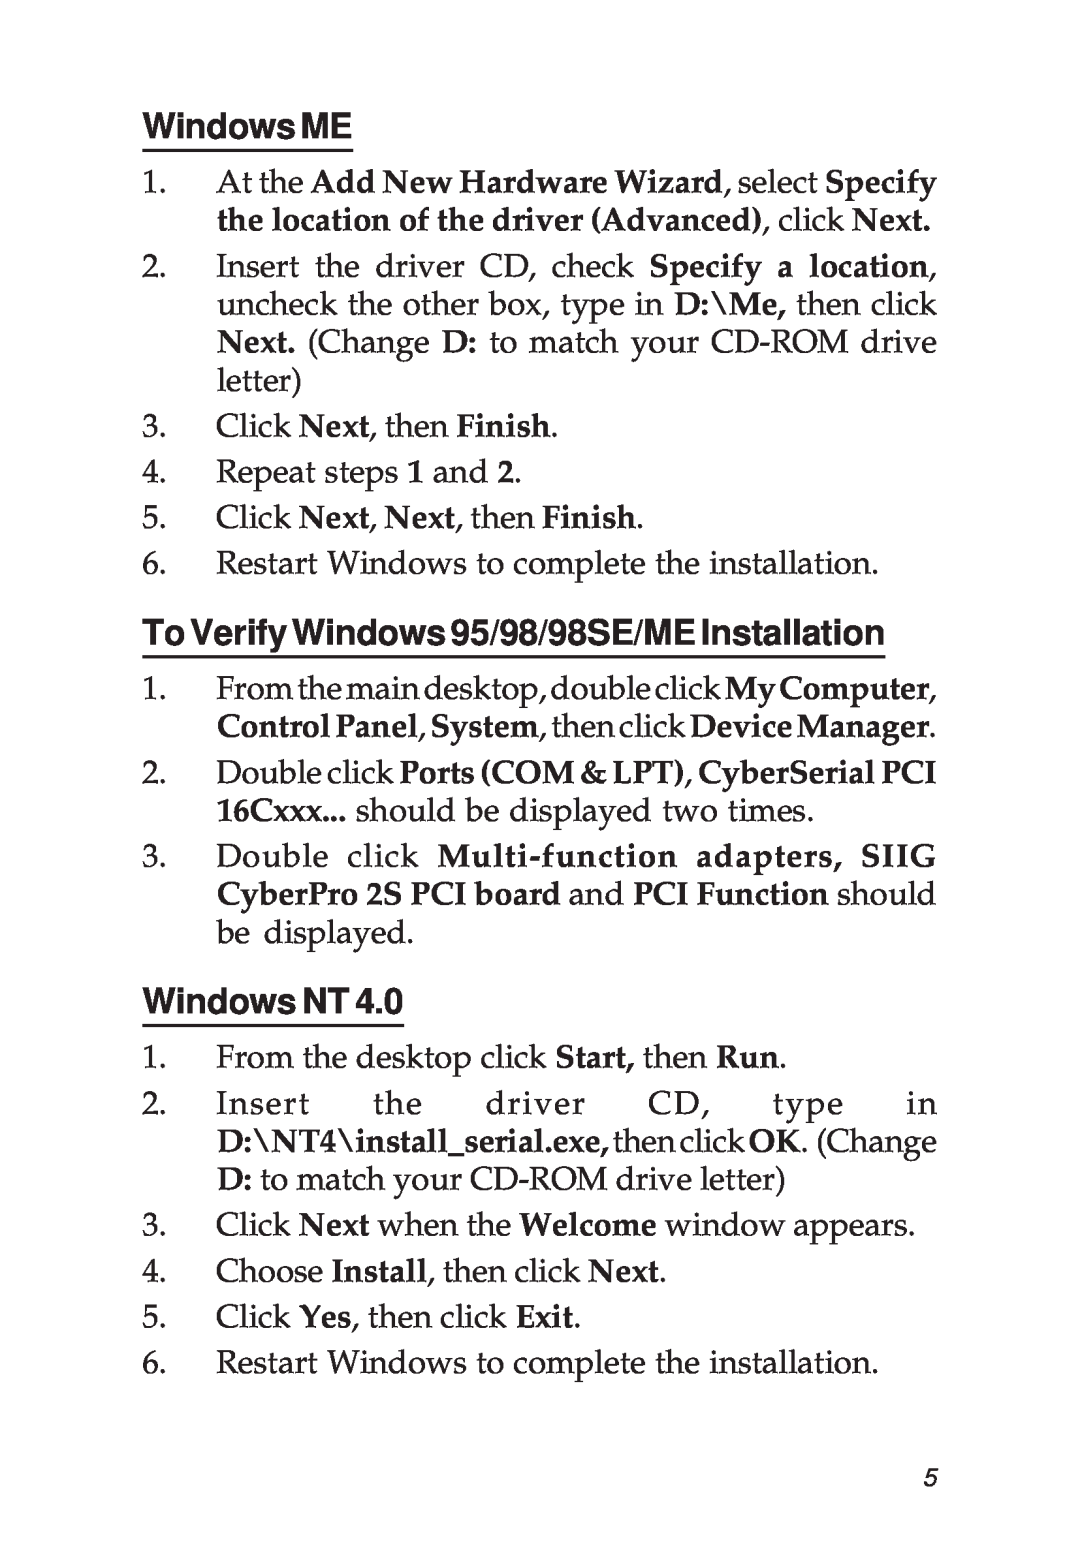 SIIG PCI 2S manual Windows ME, To Verify Windows 95/98/98SE/ME Installation, Windows NT 